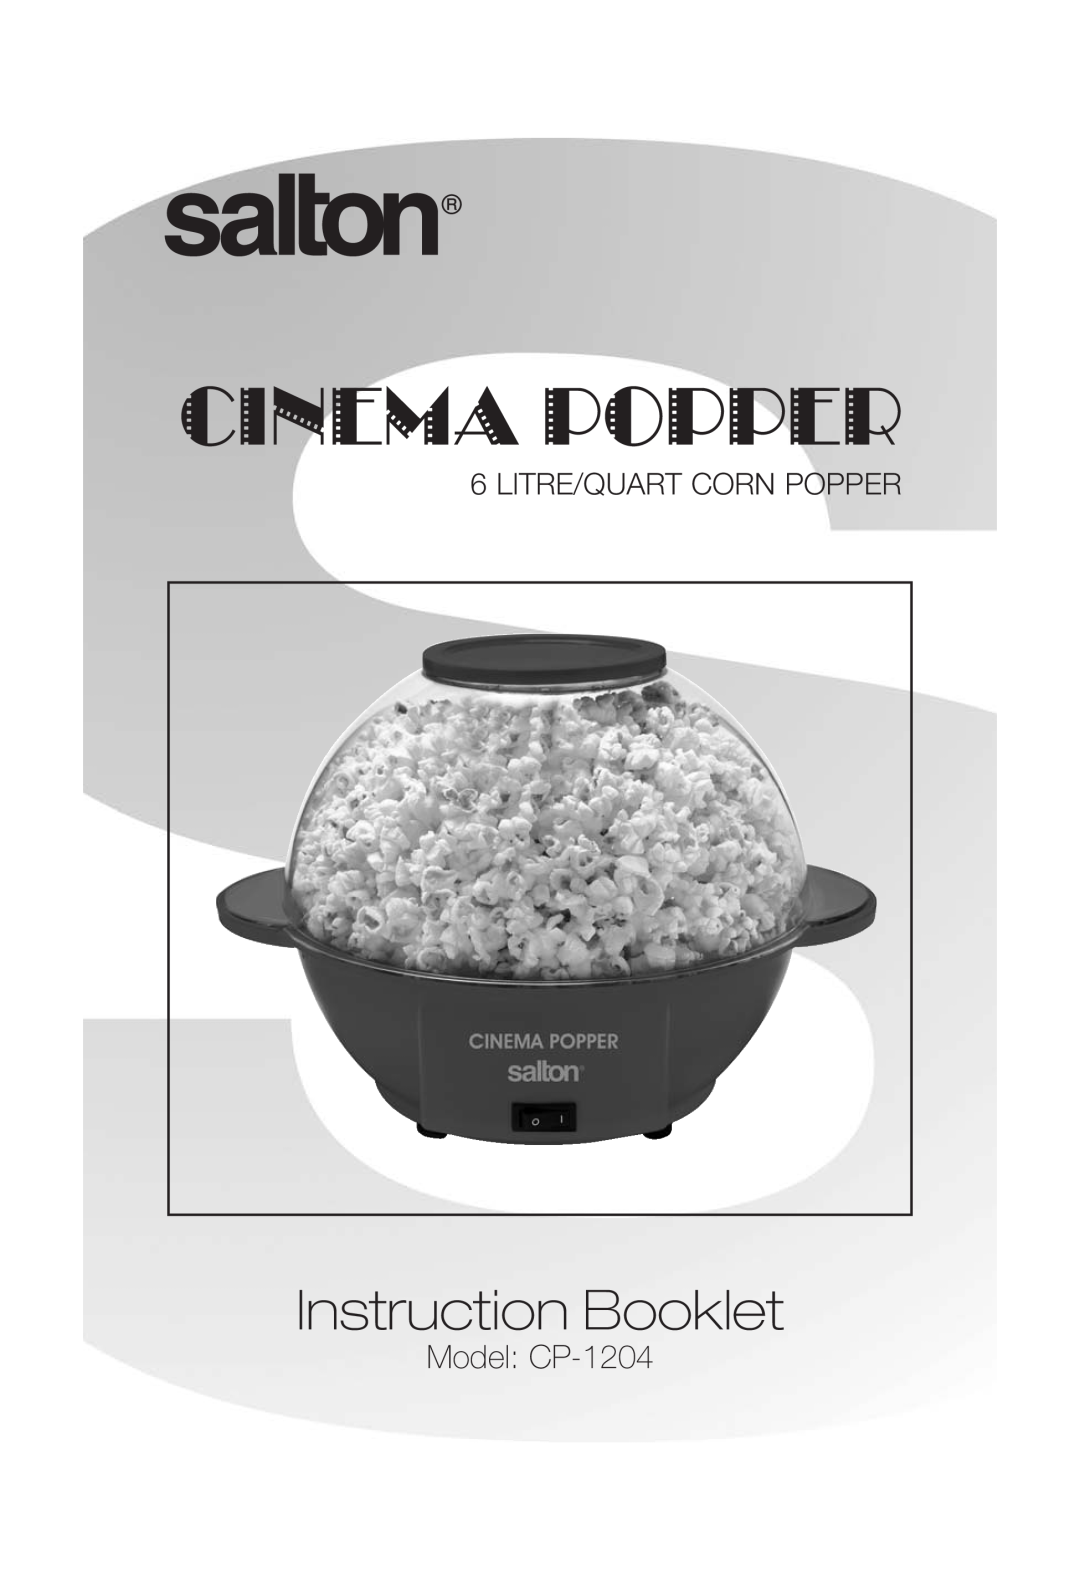 Salton manual Model CP-1204, Cinema Popper, Instruction Booklet, Litre/Quart Corn Popper 